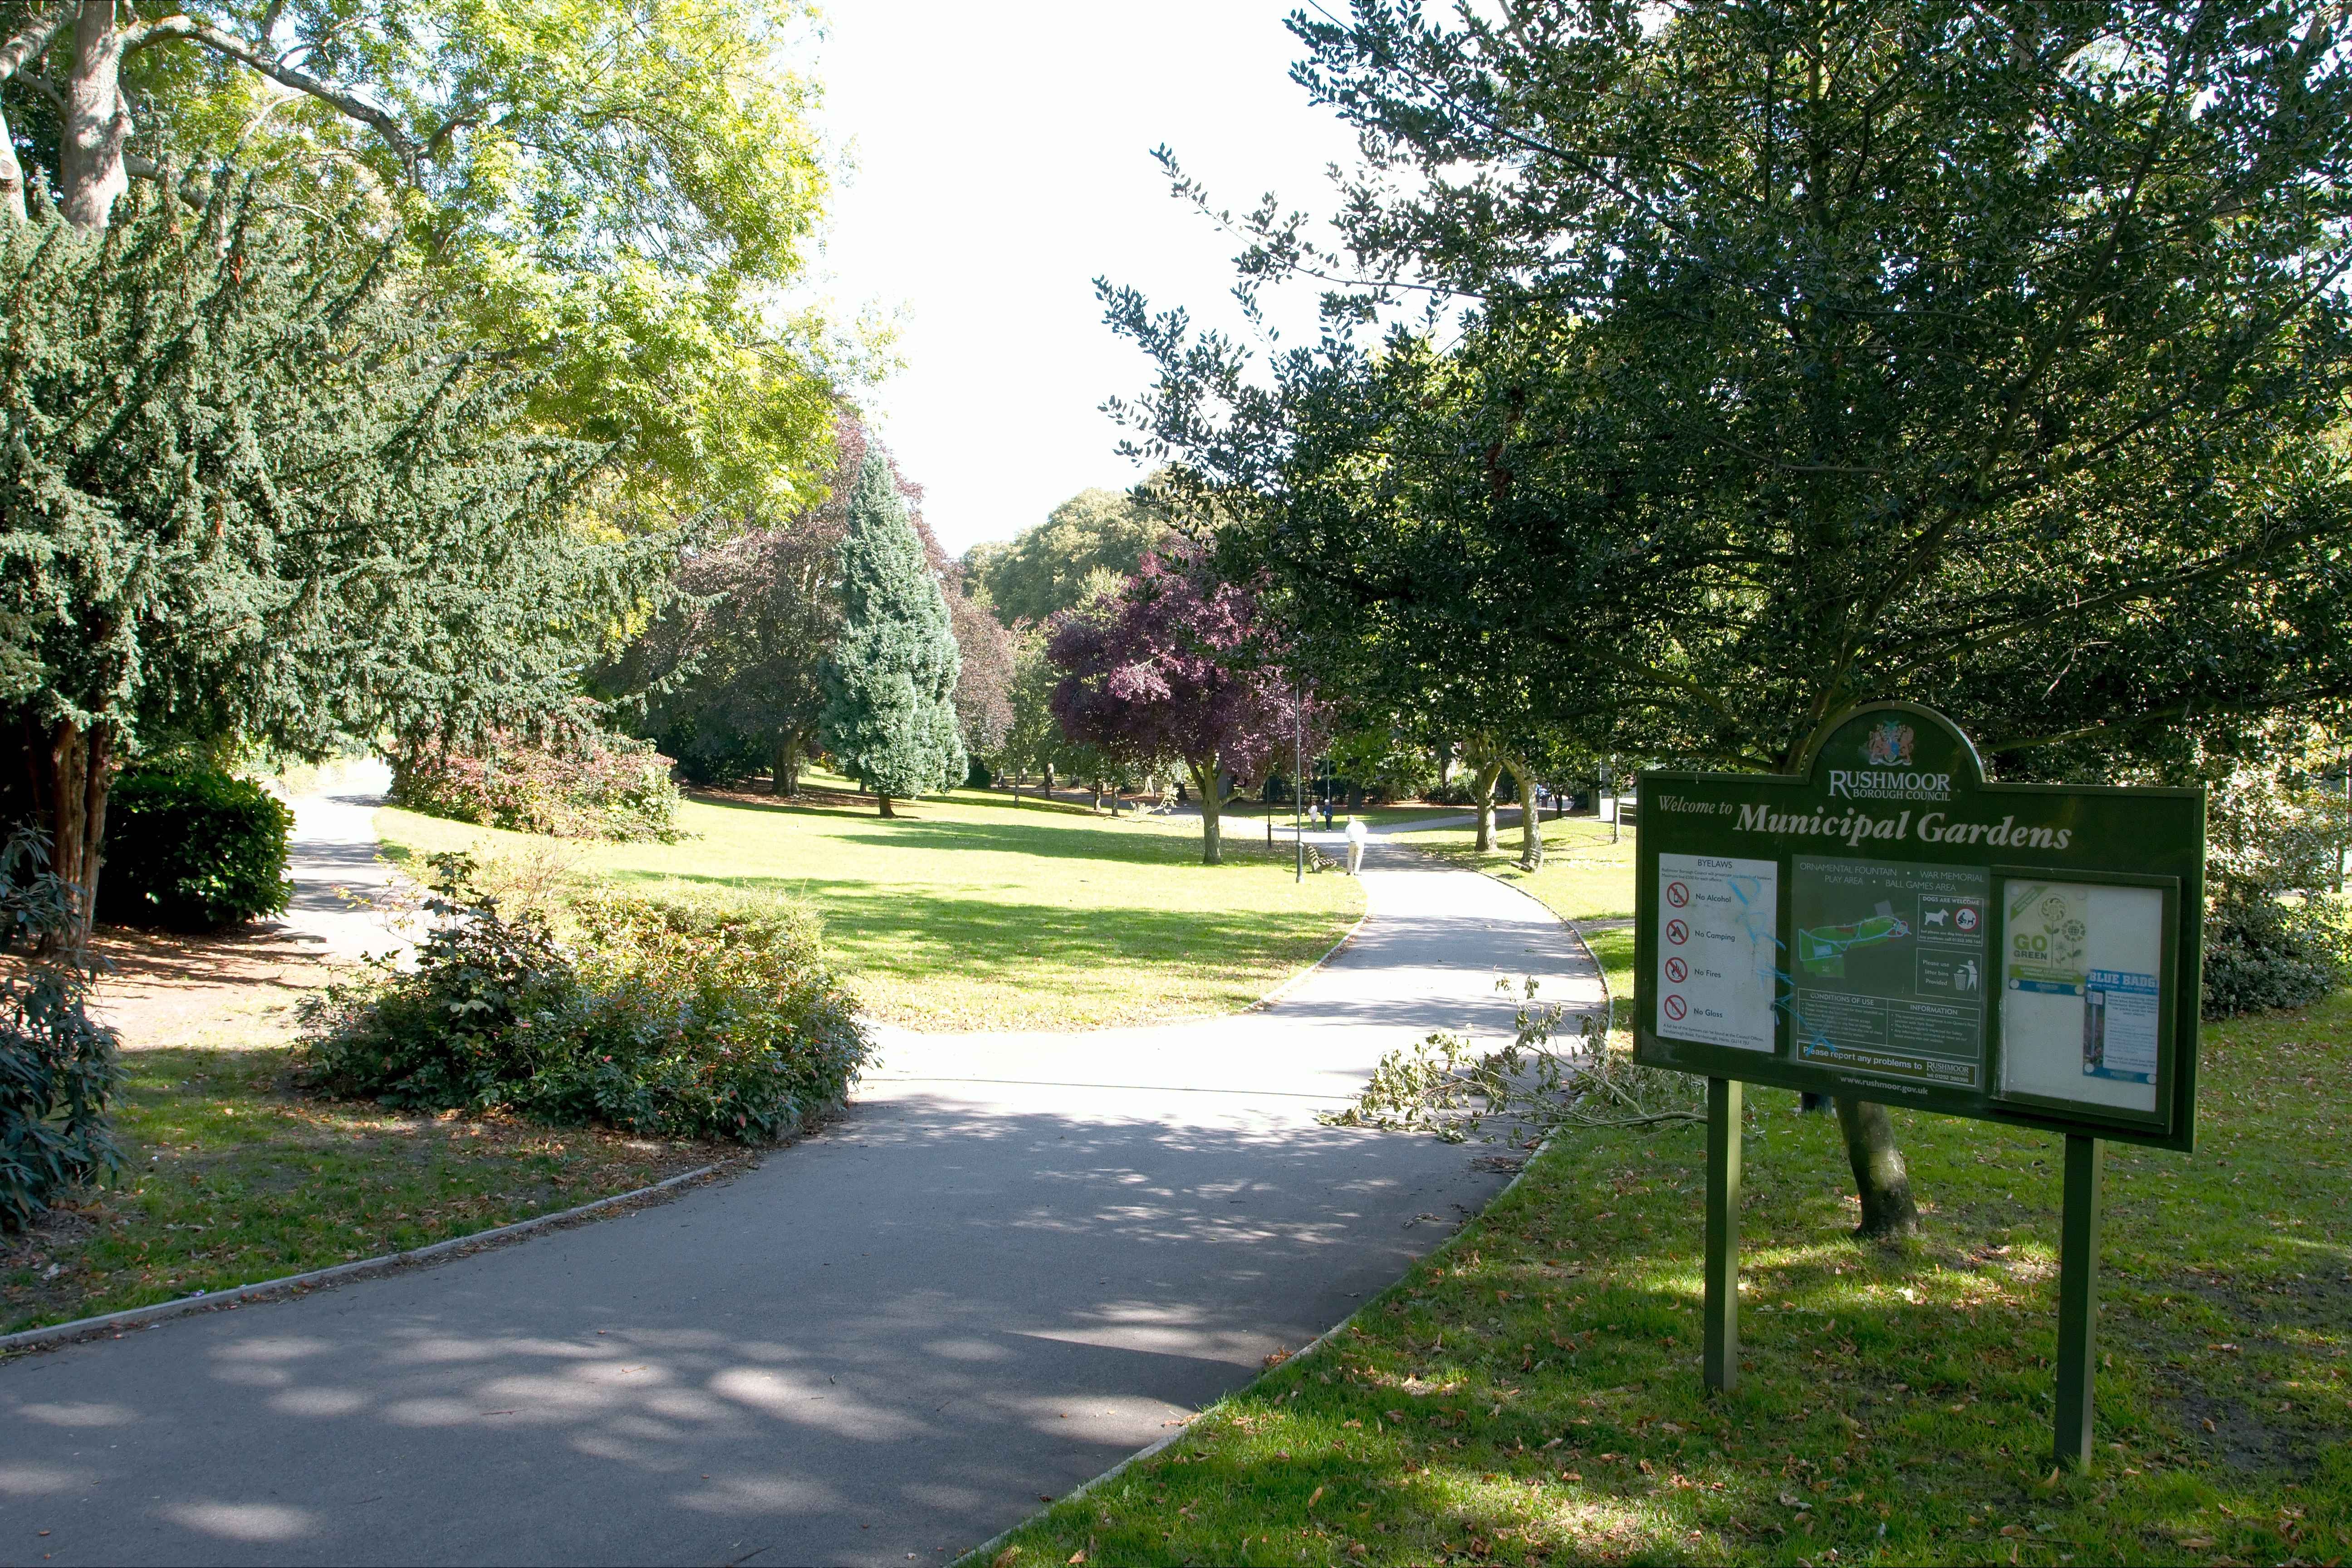 Municipal Gardens information board